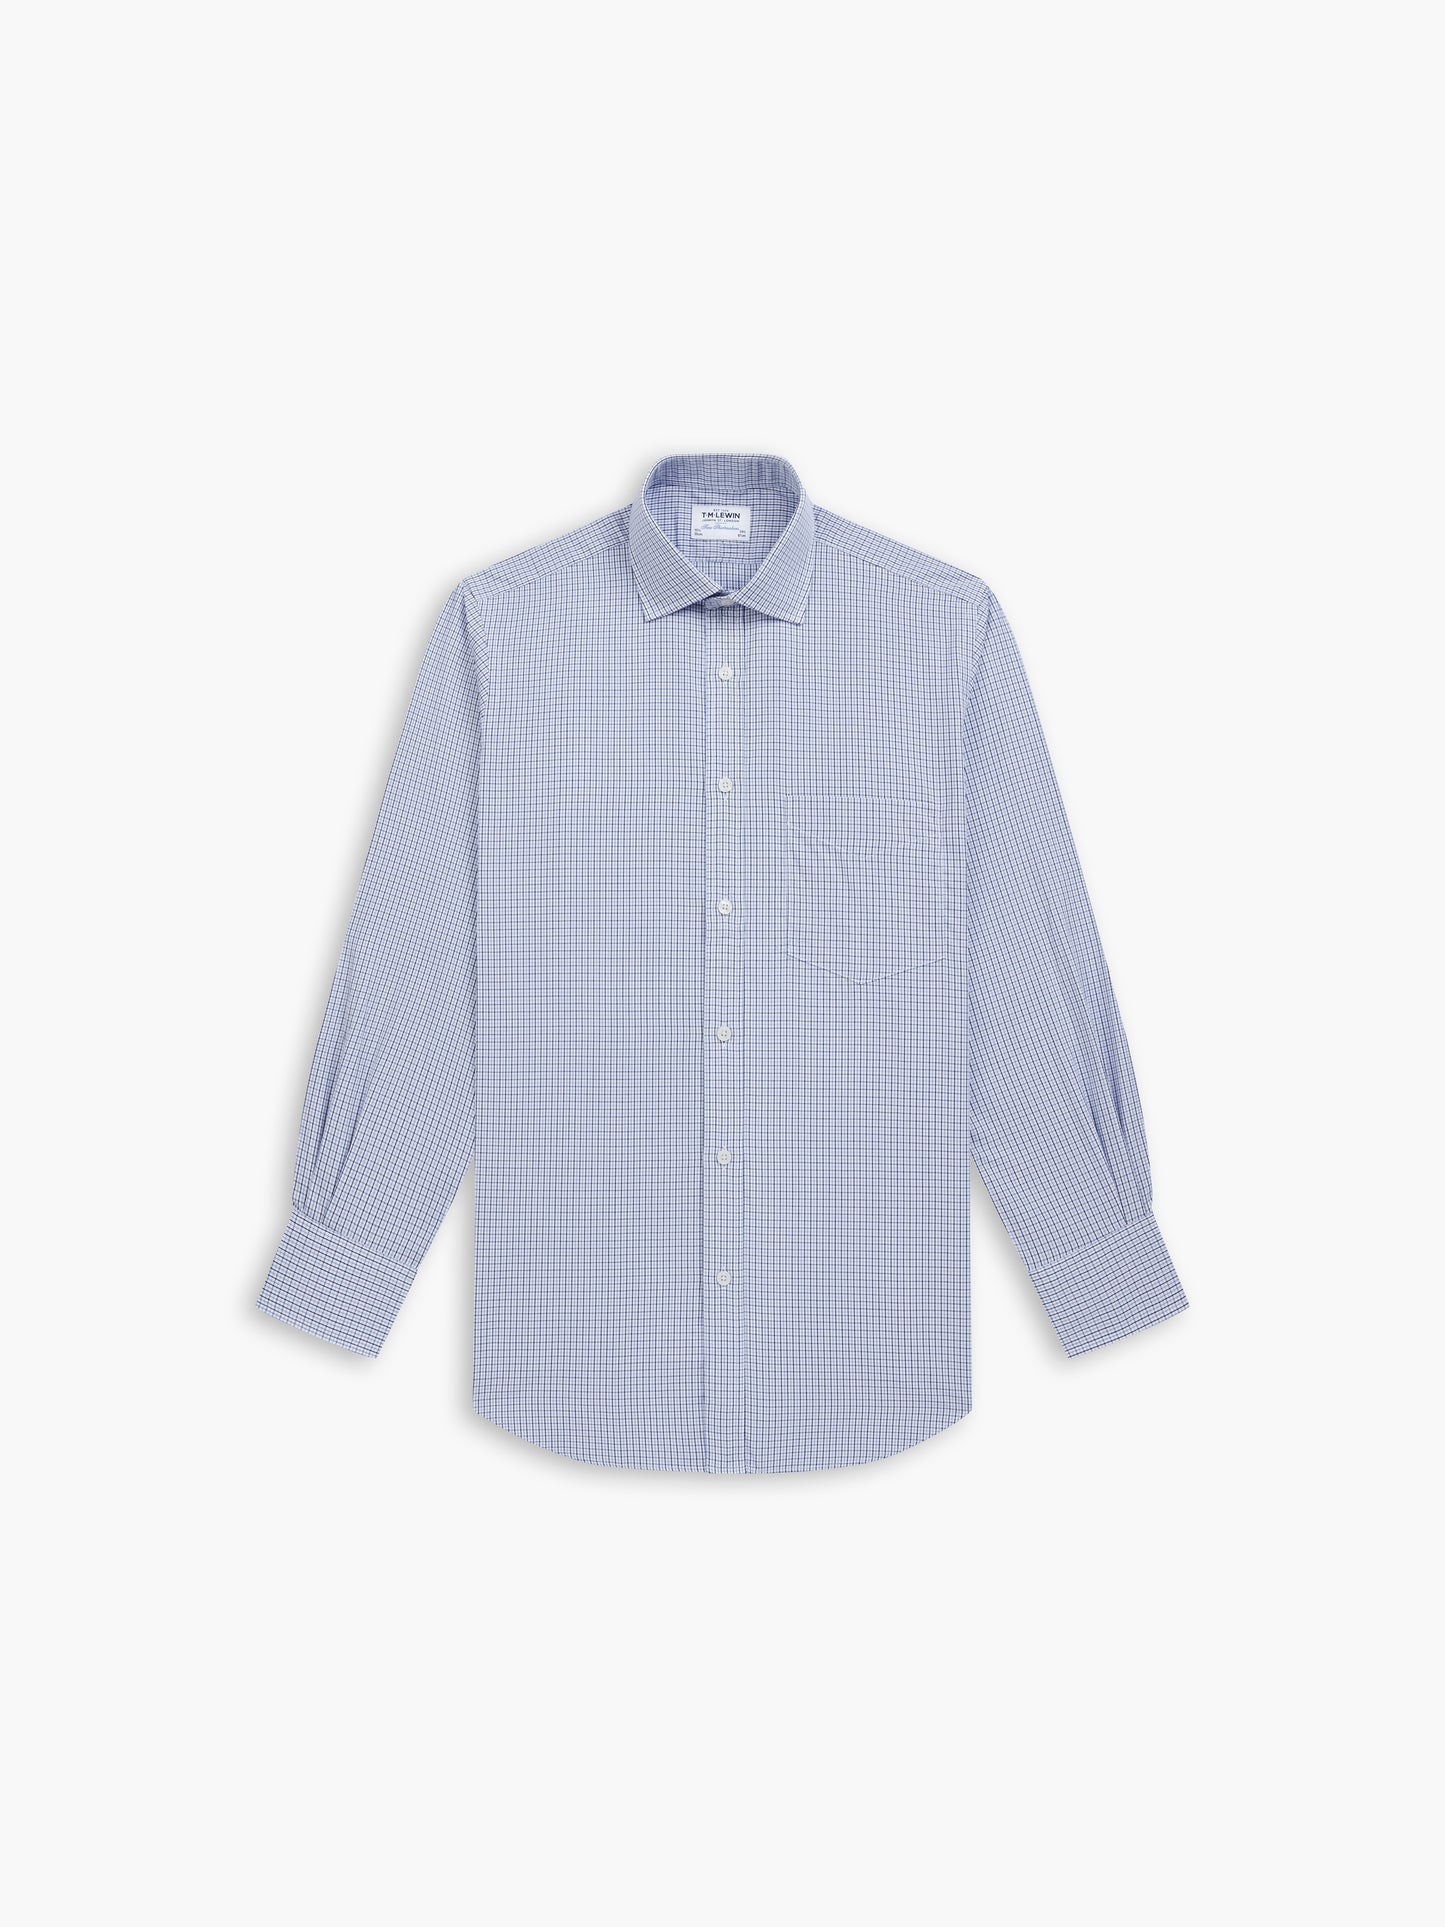 Navy & Blue Multi Grid Check Plain Weave Slim Fit Single Cuff Classic Collar Shirt